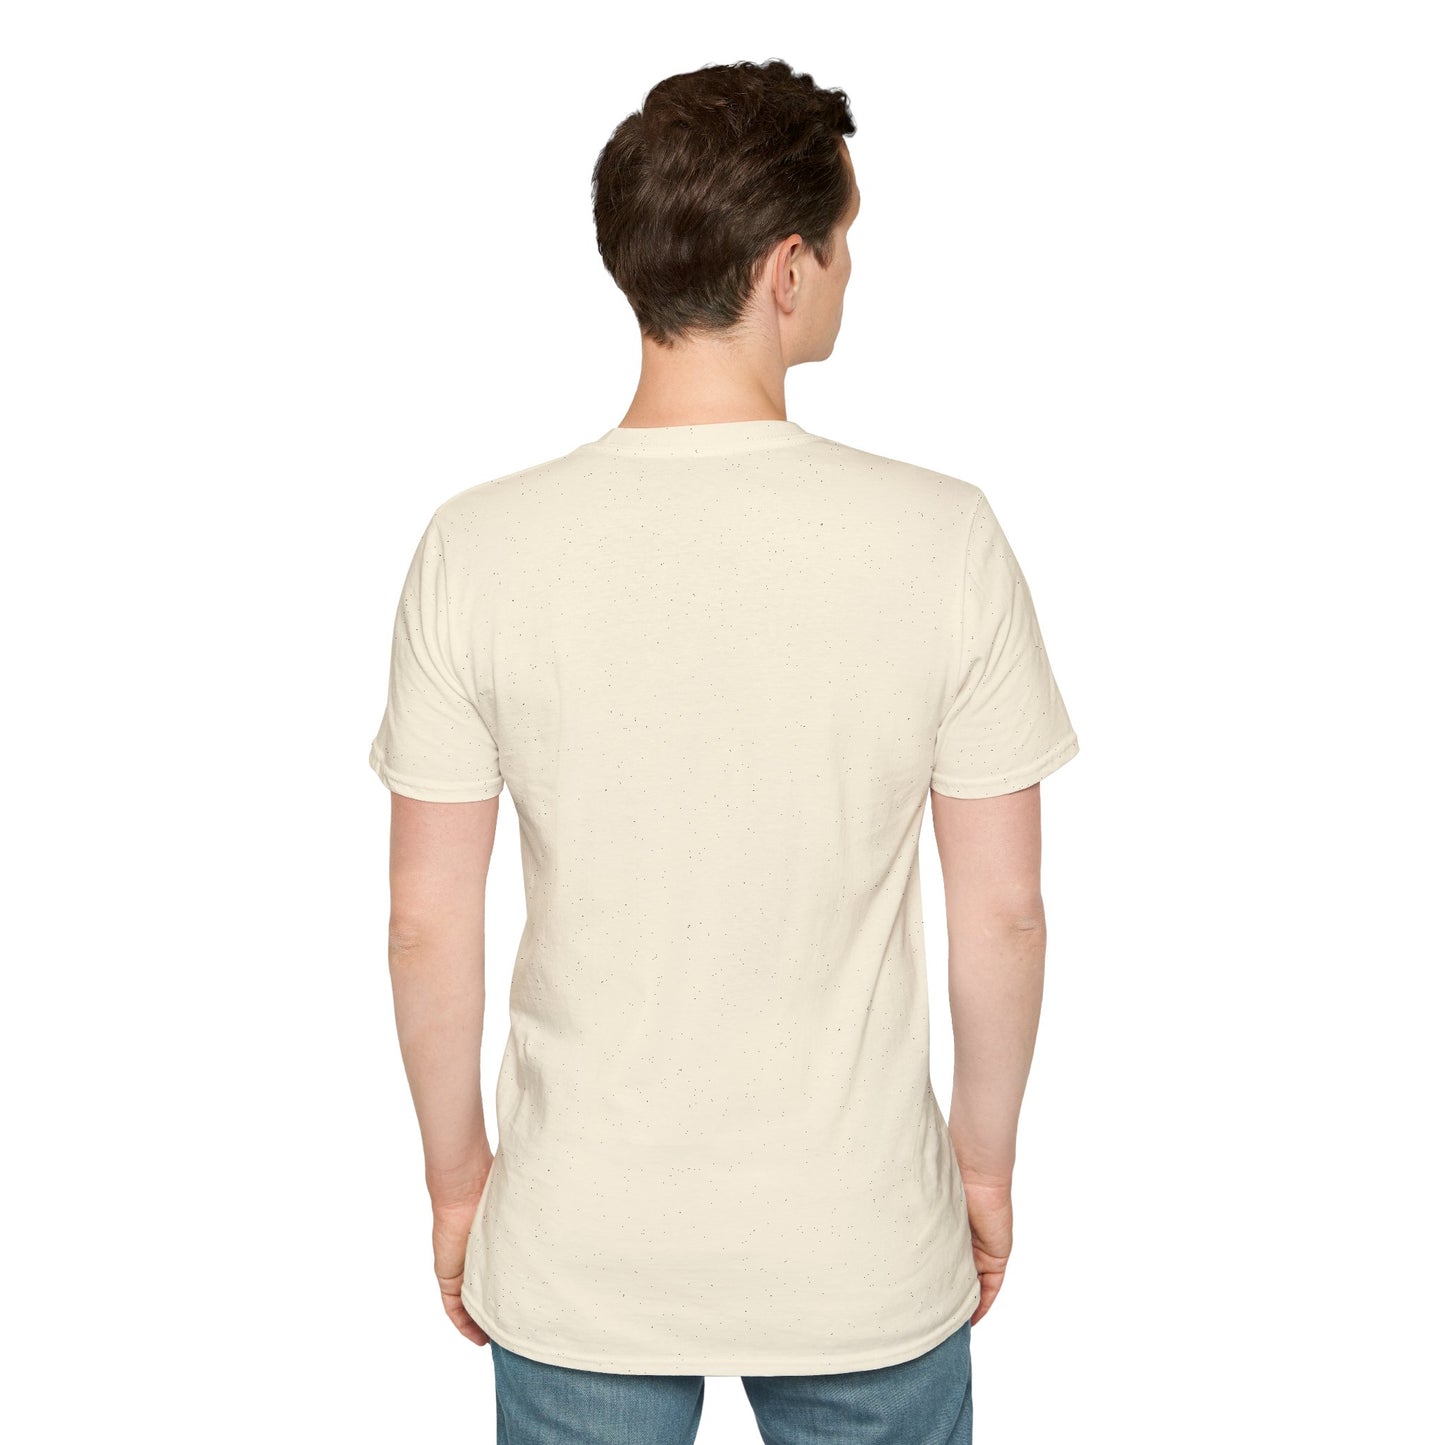 Aba Gorgorios -Unisex T-Shirt